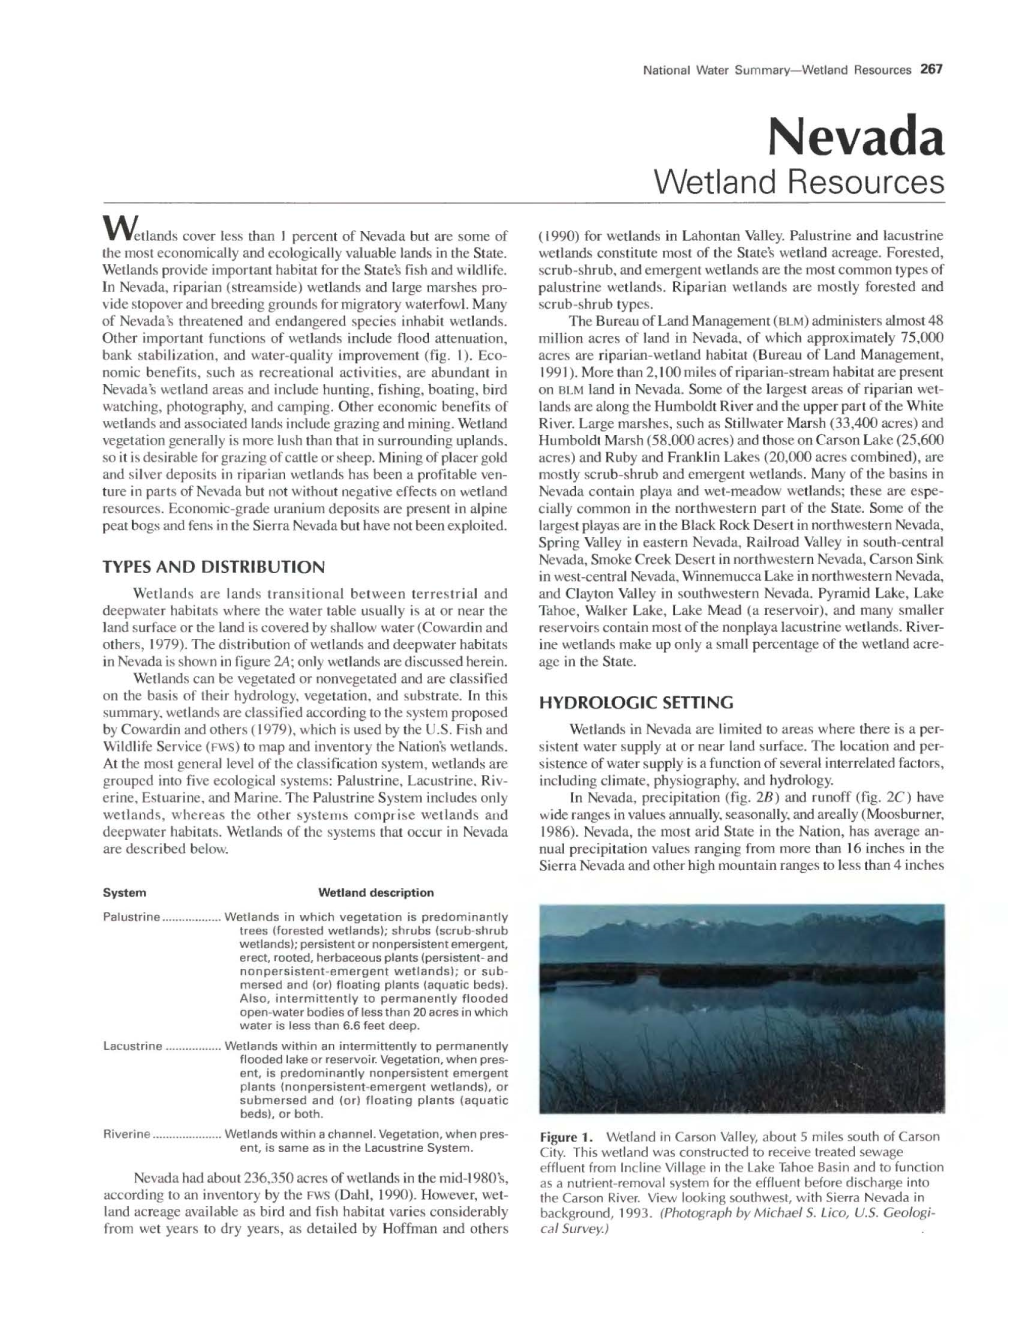 National Water Summary Wetland Resources: Nevada